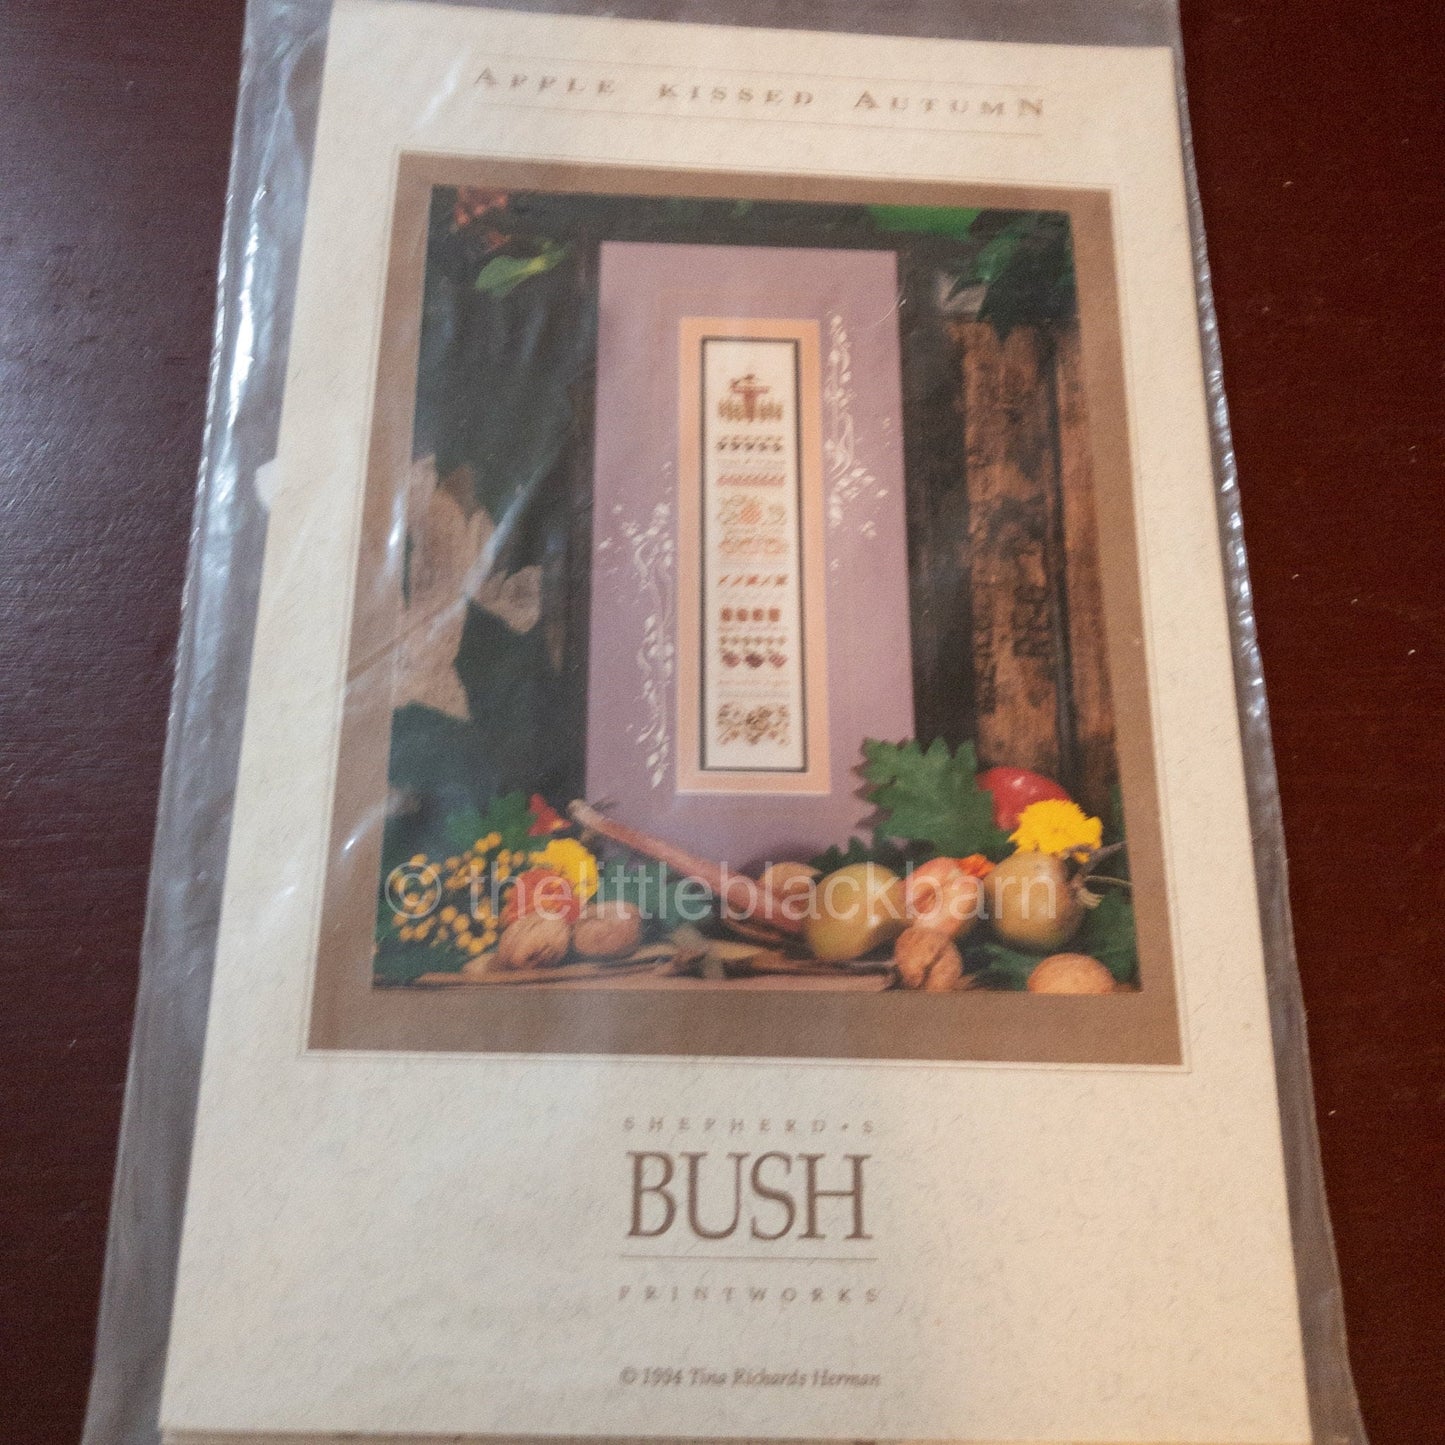 Shepherd's Bush, Apple Kissed Autumn, Vintage 1994, Chart Only*